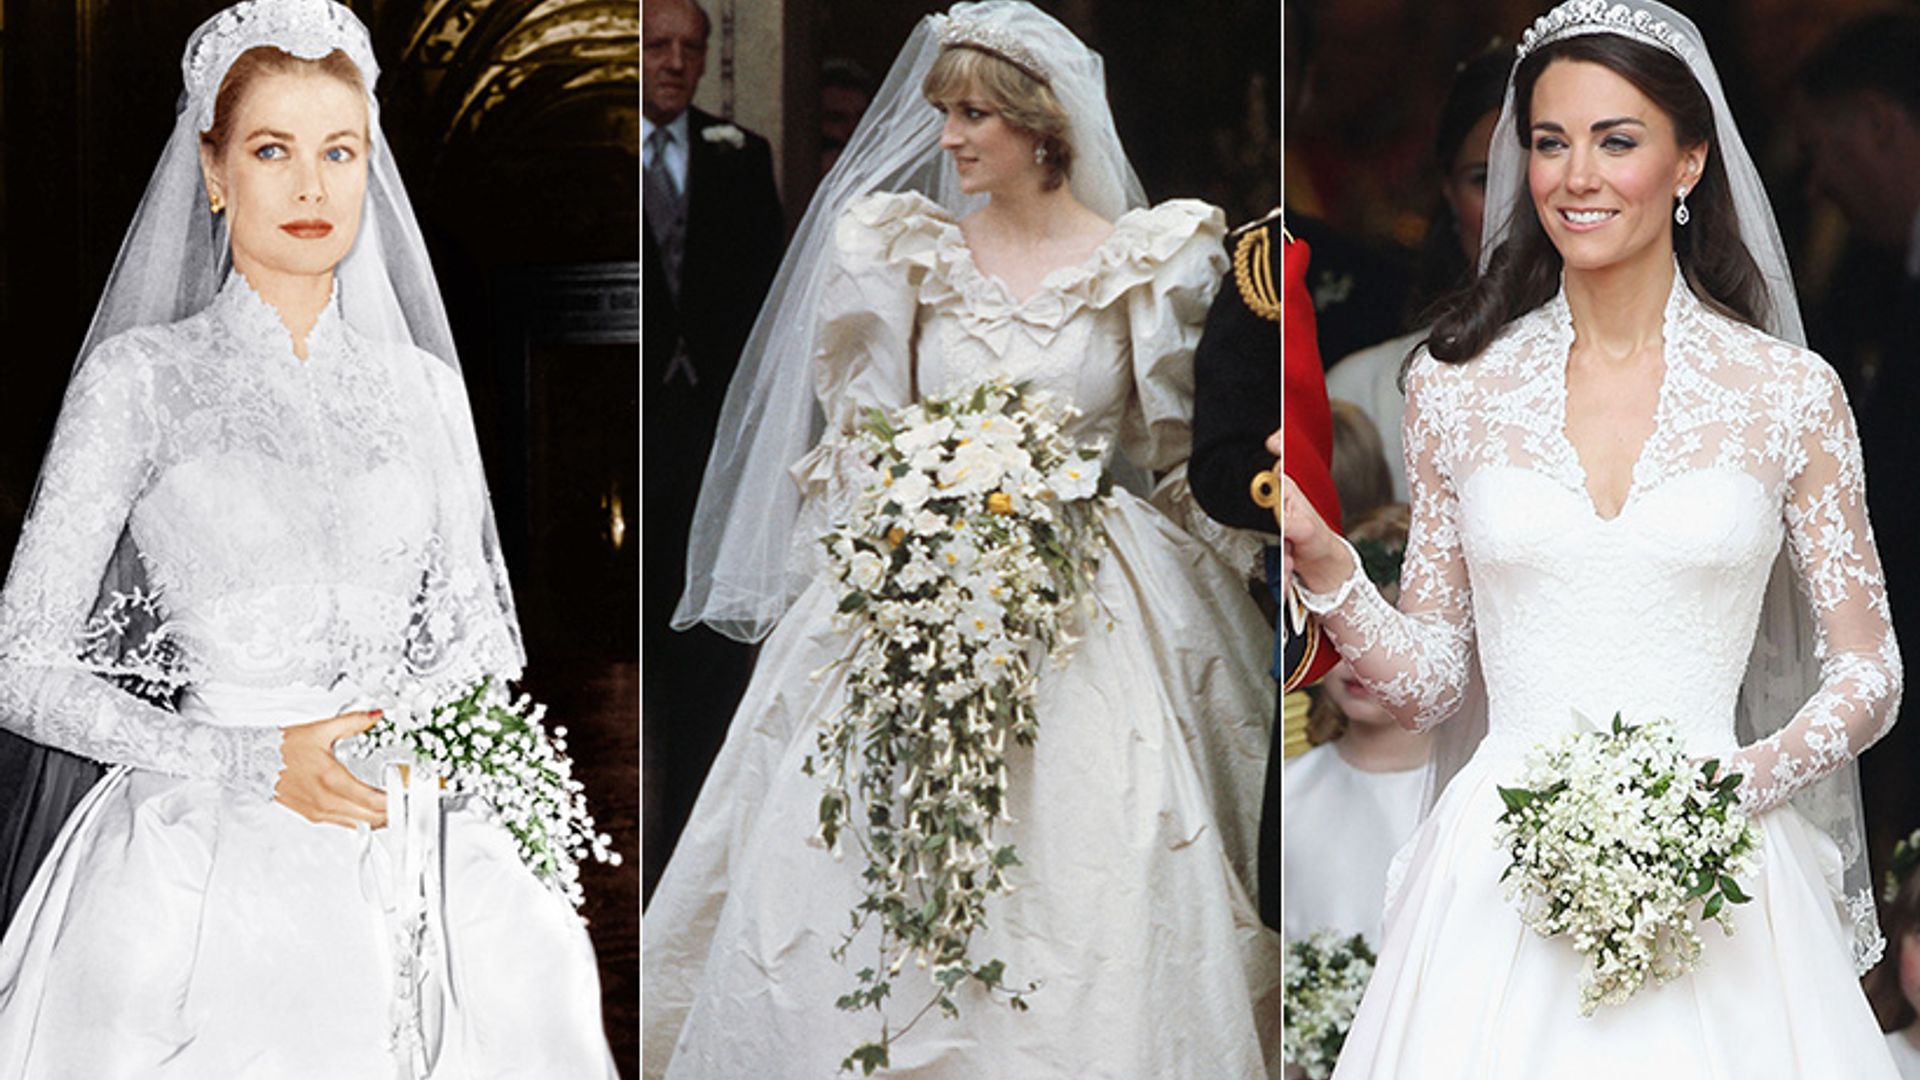 Choosing wedding flowers? See these bridal bouquet arrangements | HELLO!